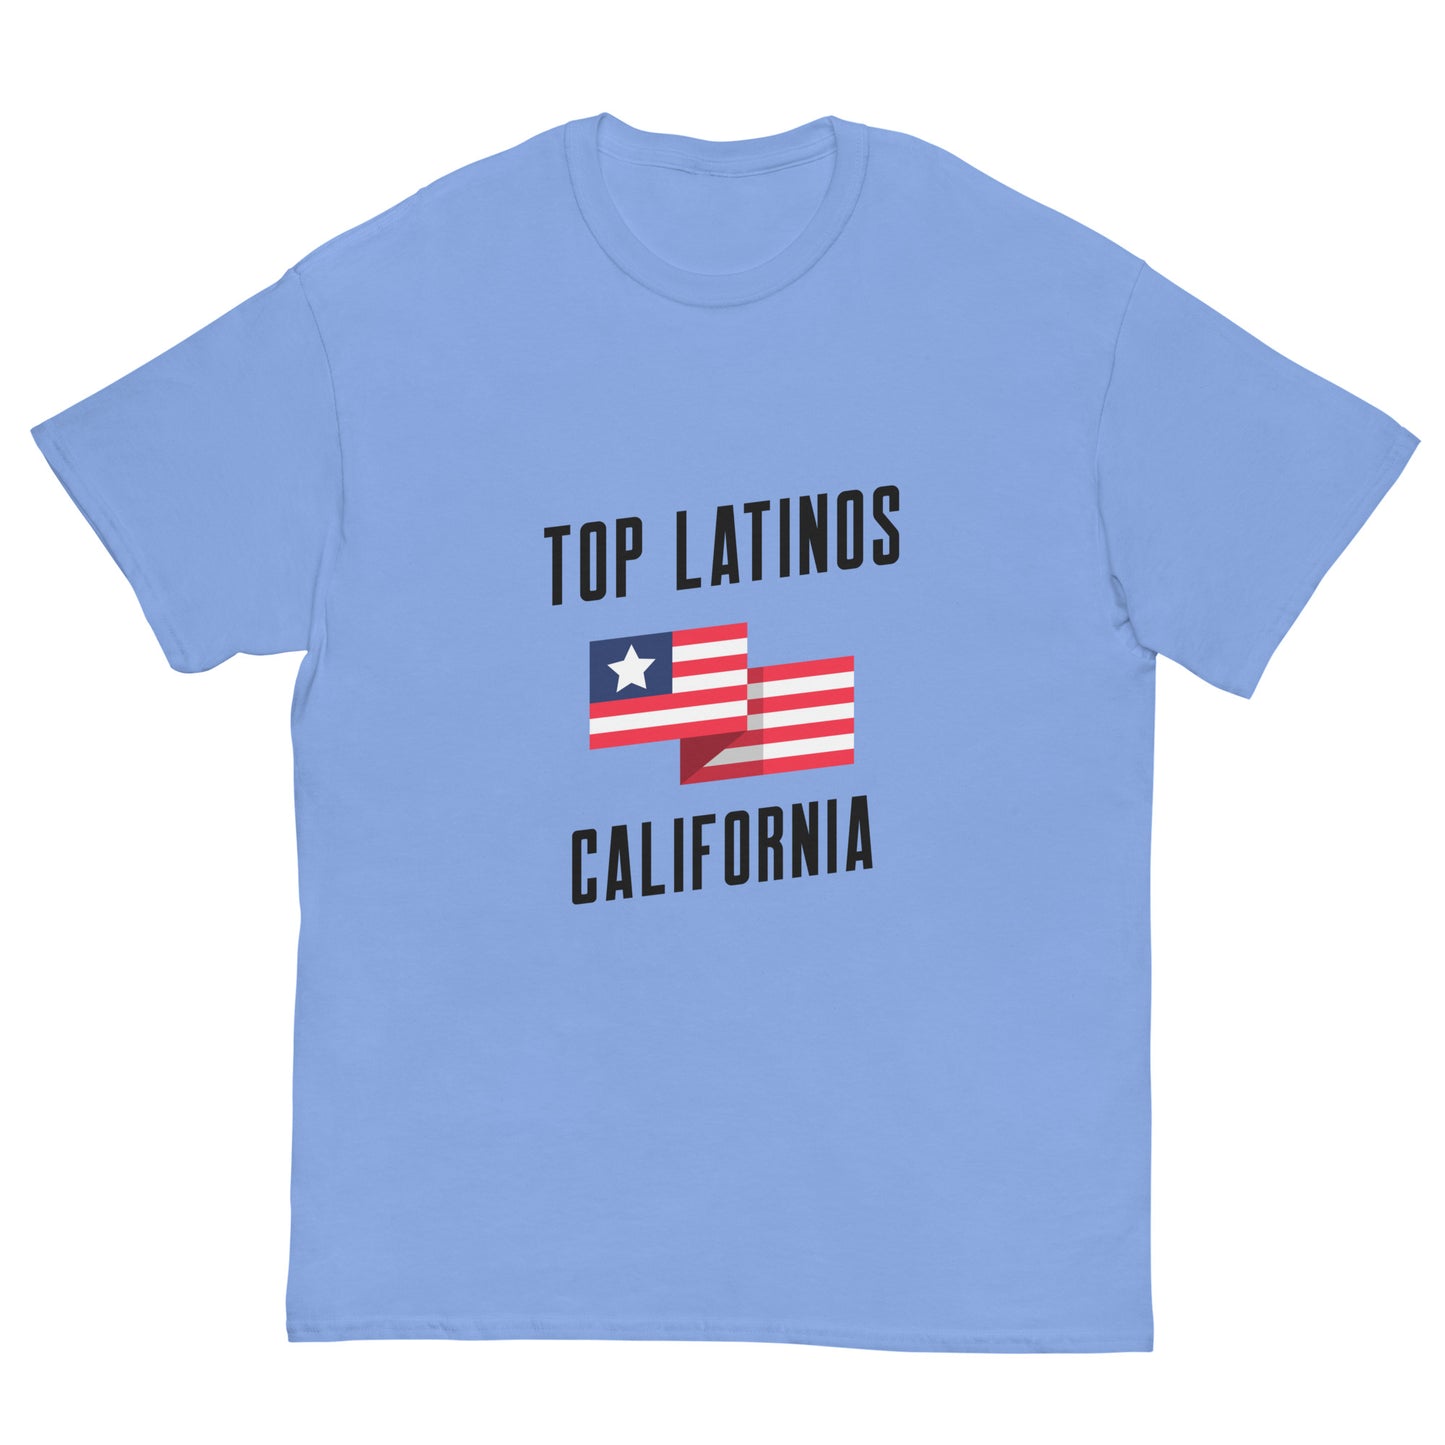 Top Latinos California classic tee